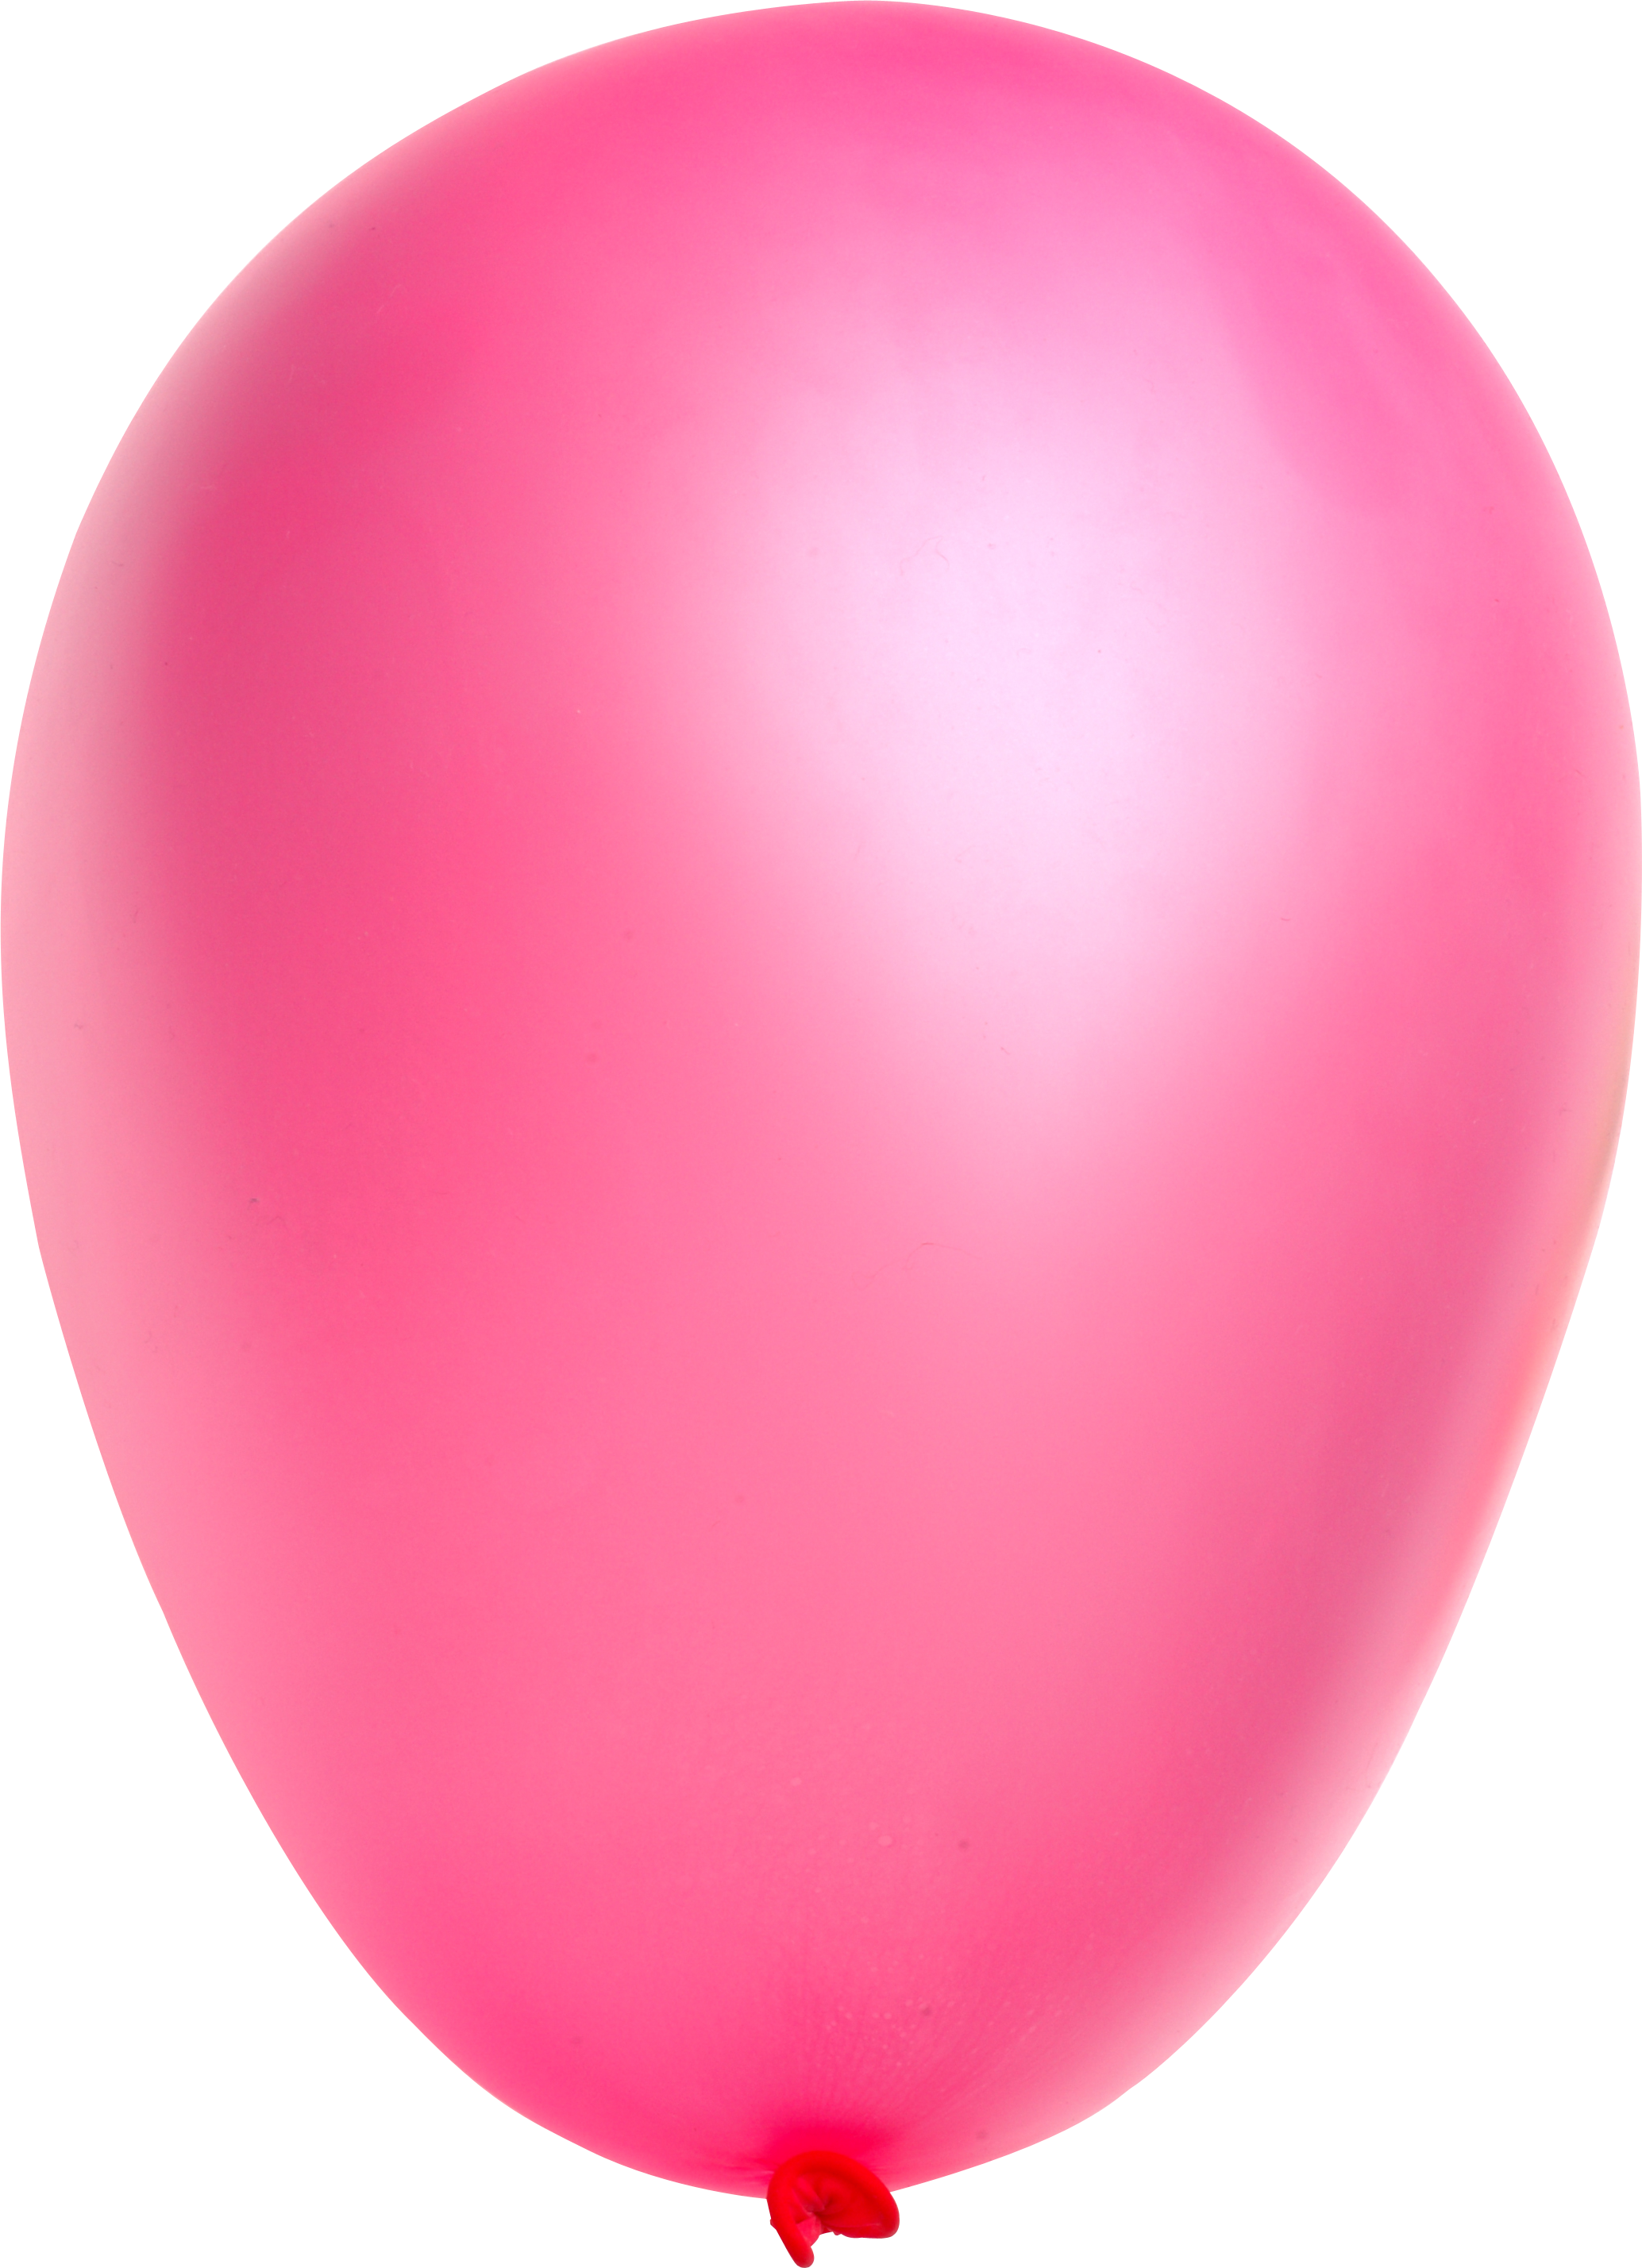 Pink Balloon PNG Image